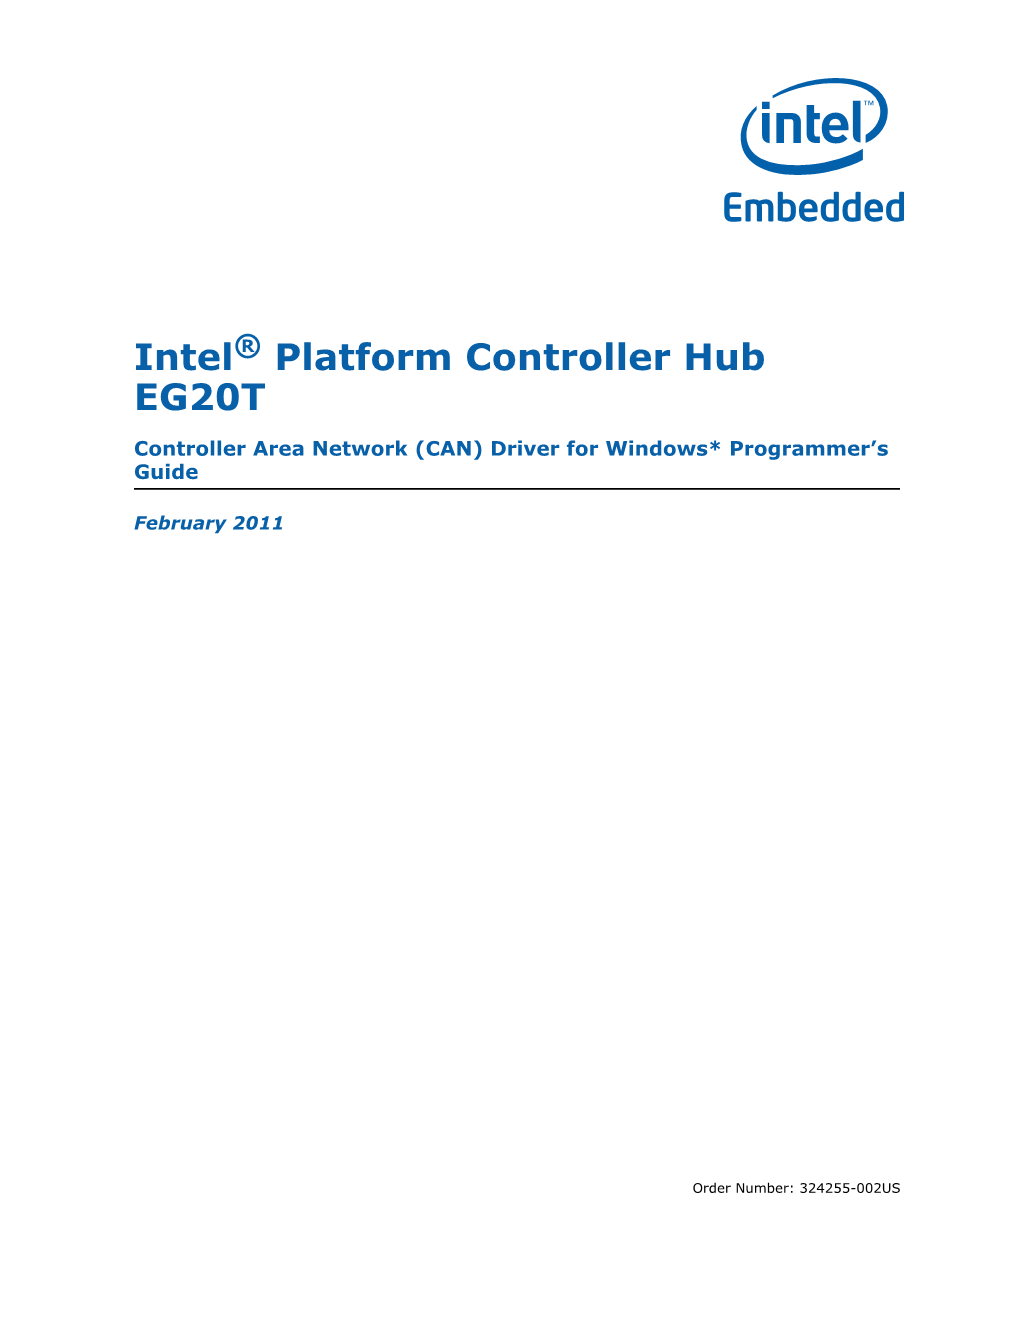 Platform Controller Hub EG20T